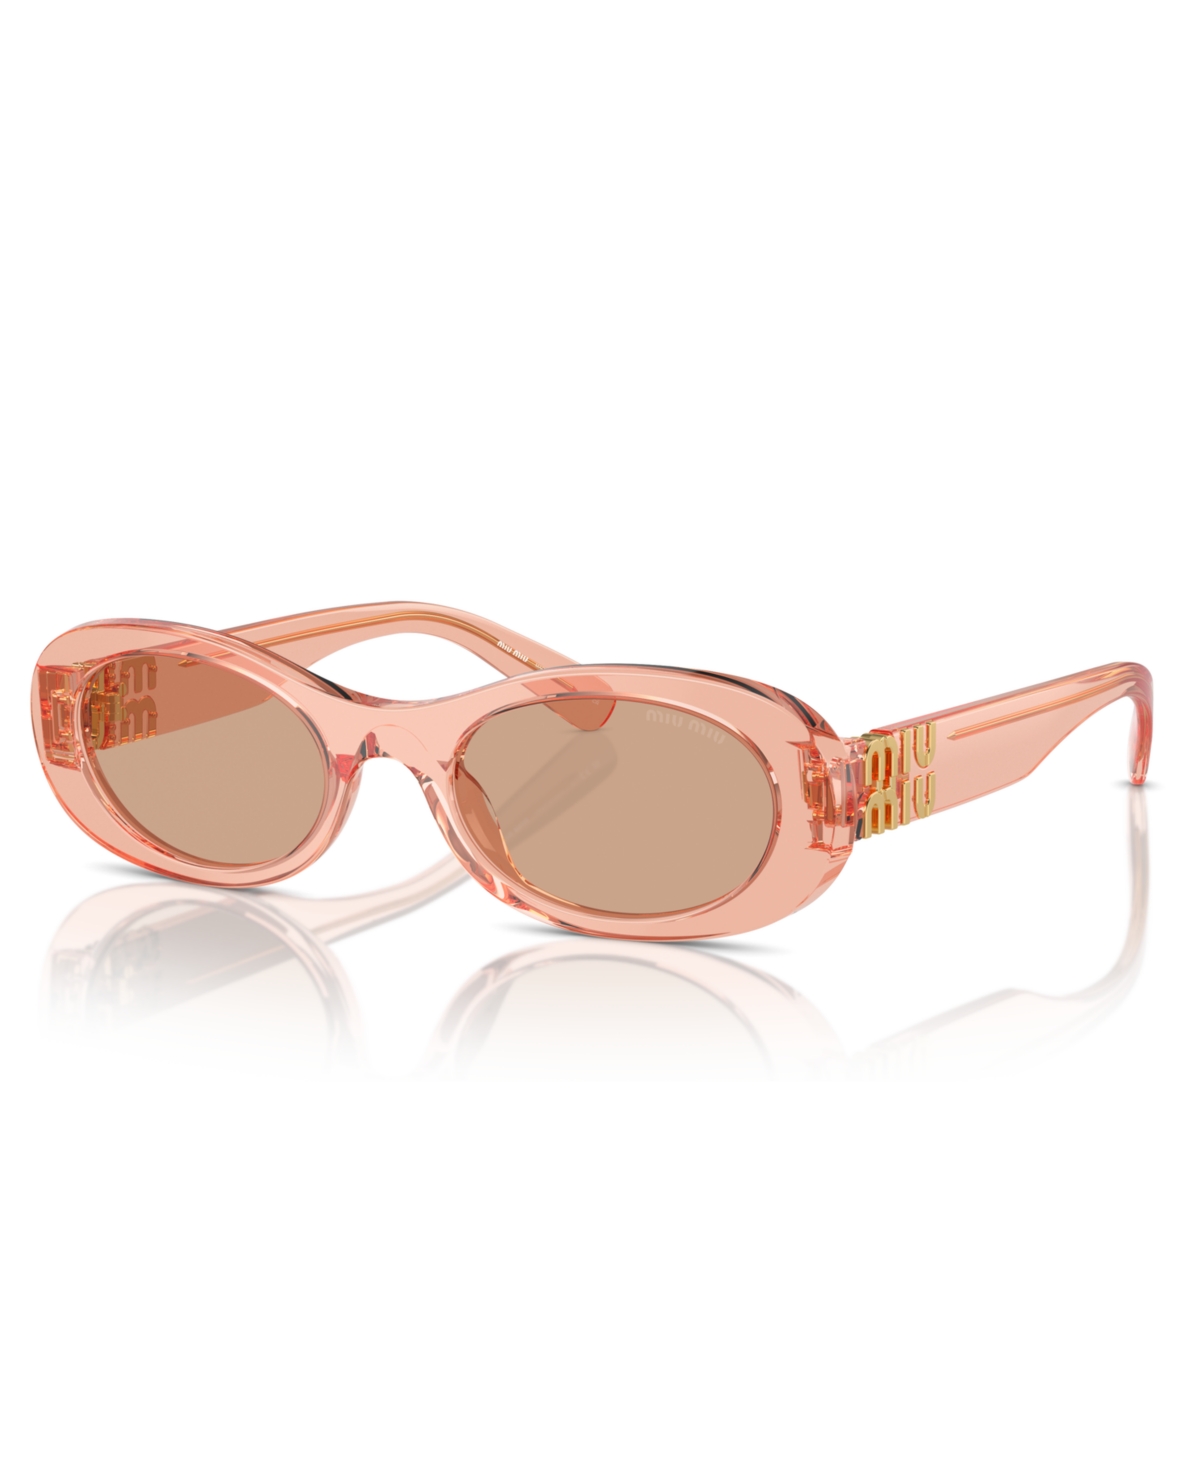 Women's Sunglasses, Mu 06Zs - Noisette Transparent